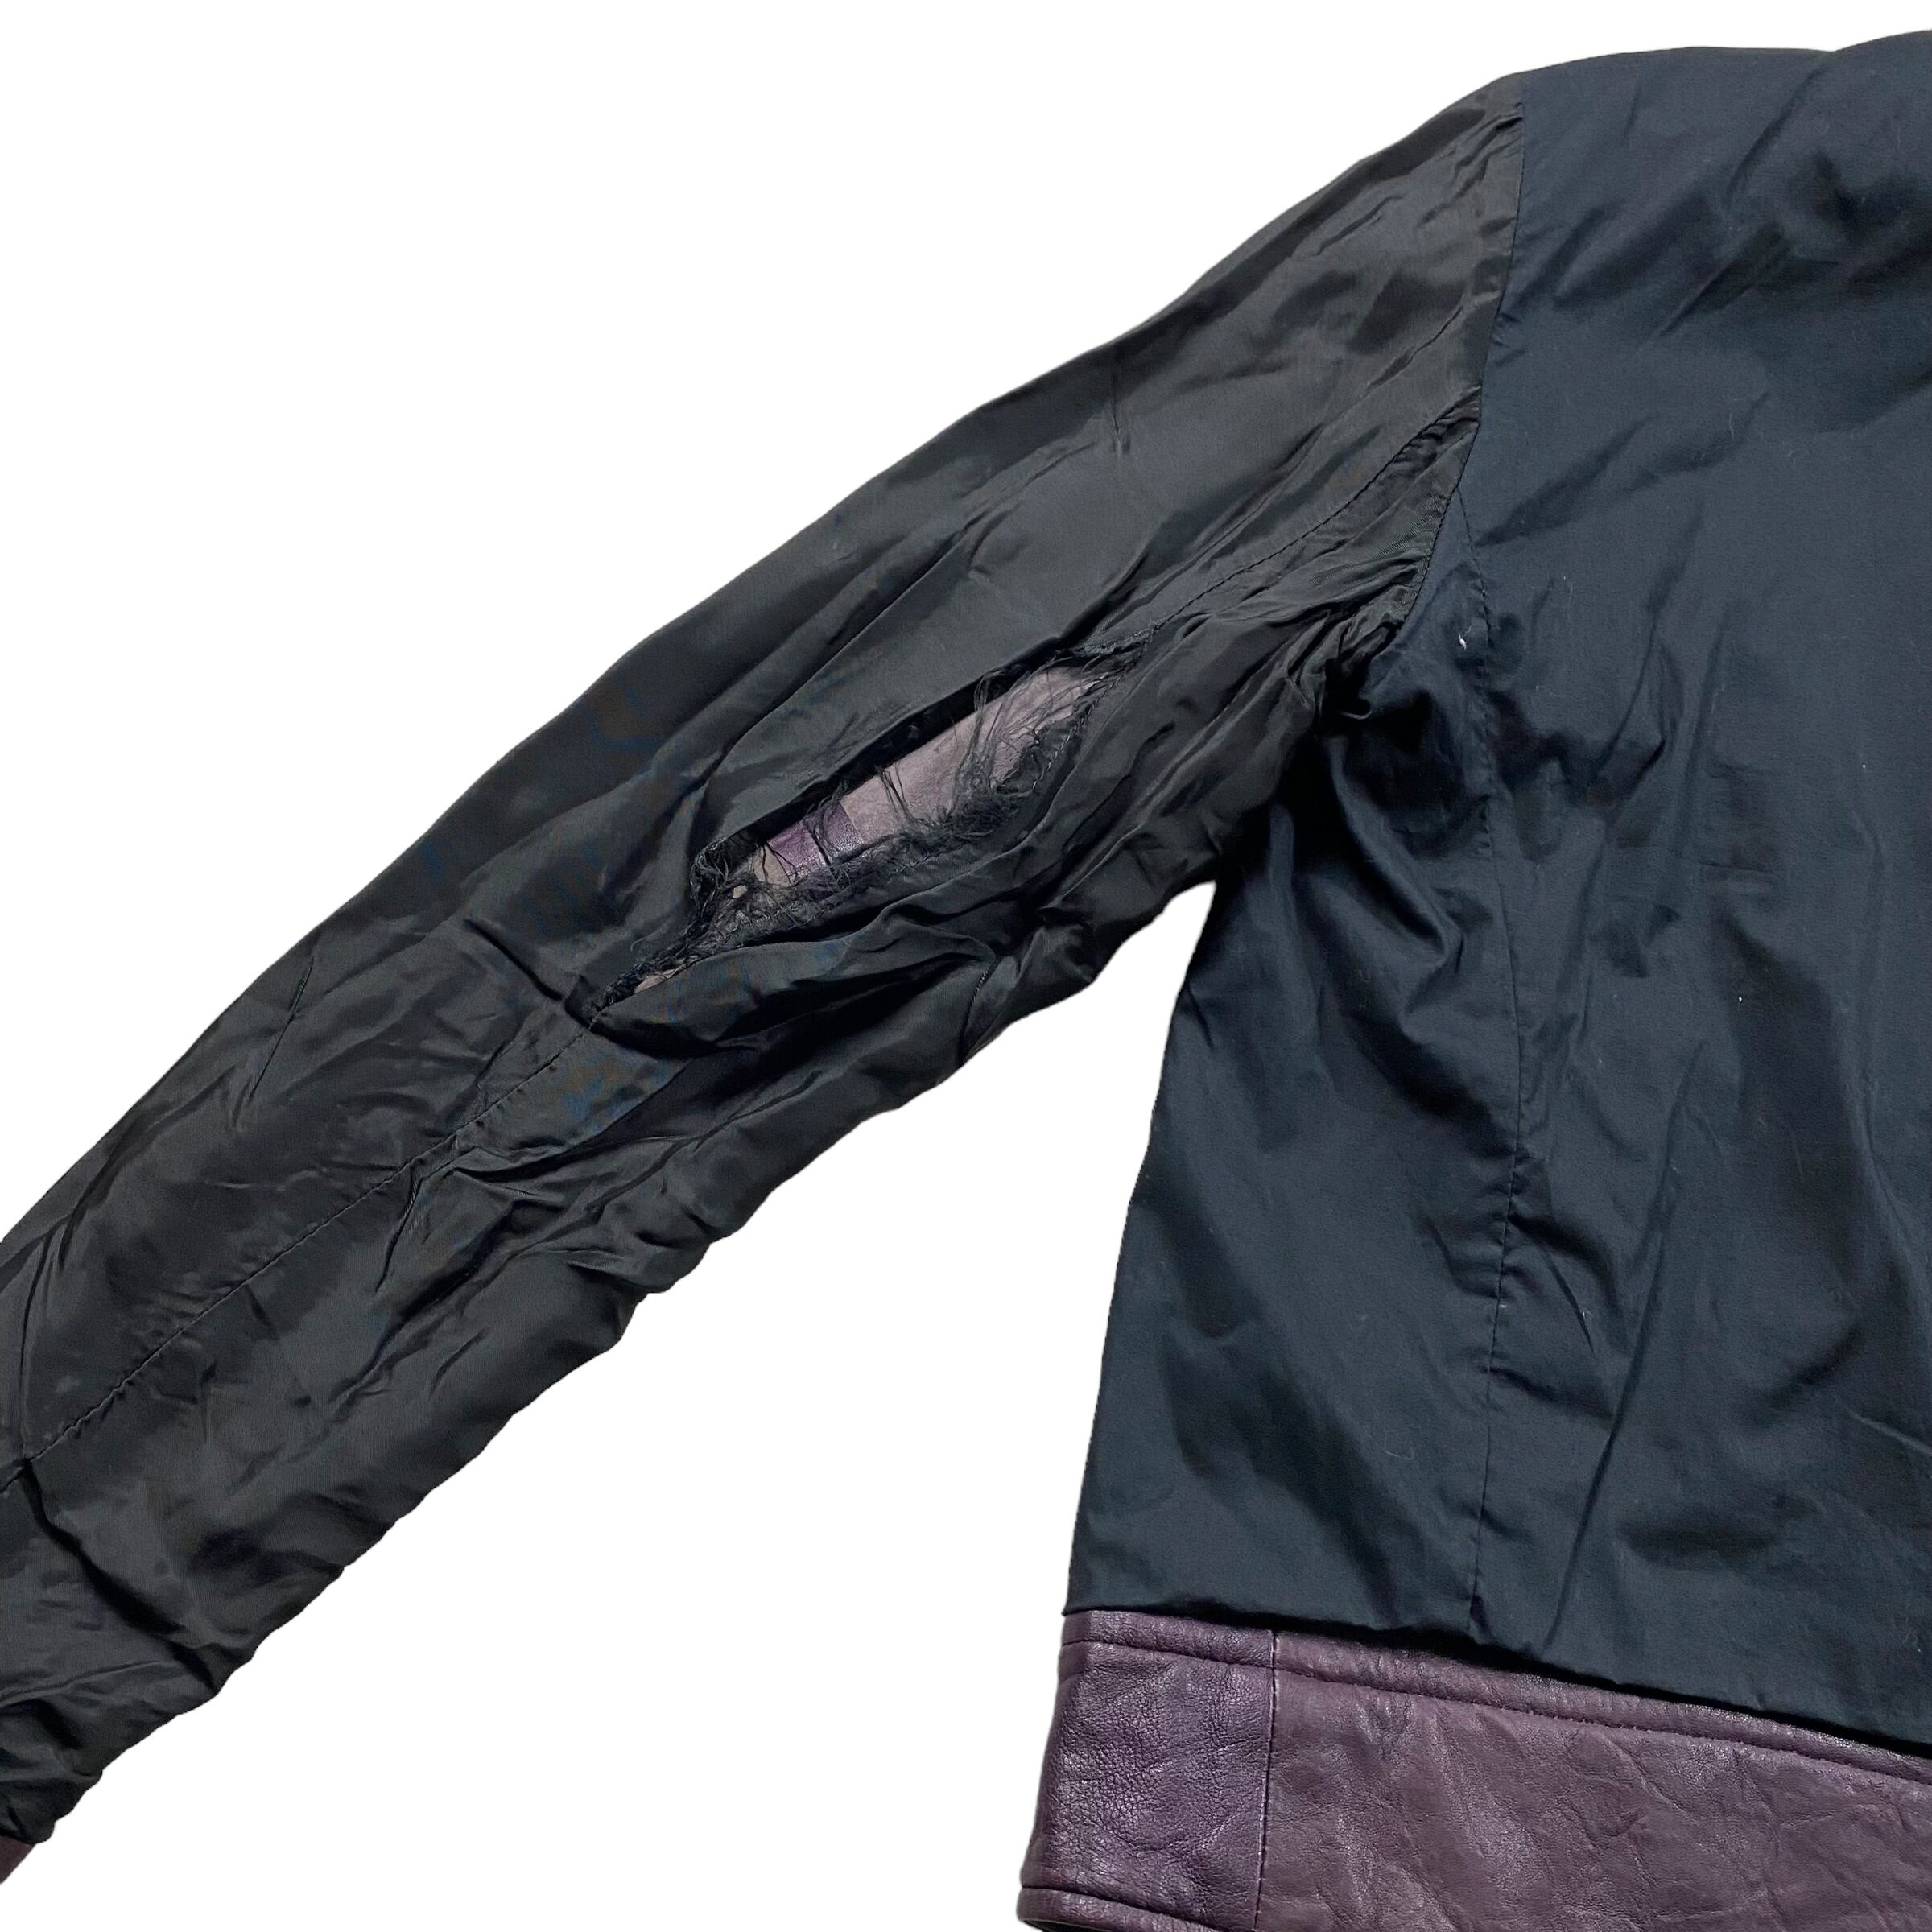 CARLO CARMAGNINI purple leather single riders jacket | NOIR ONLINE